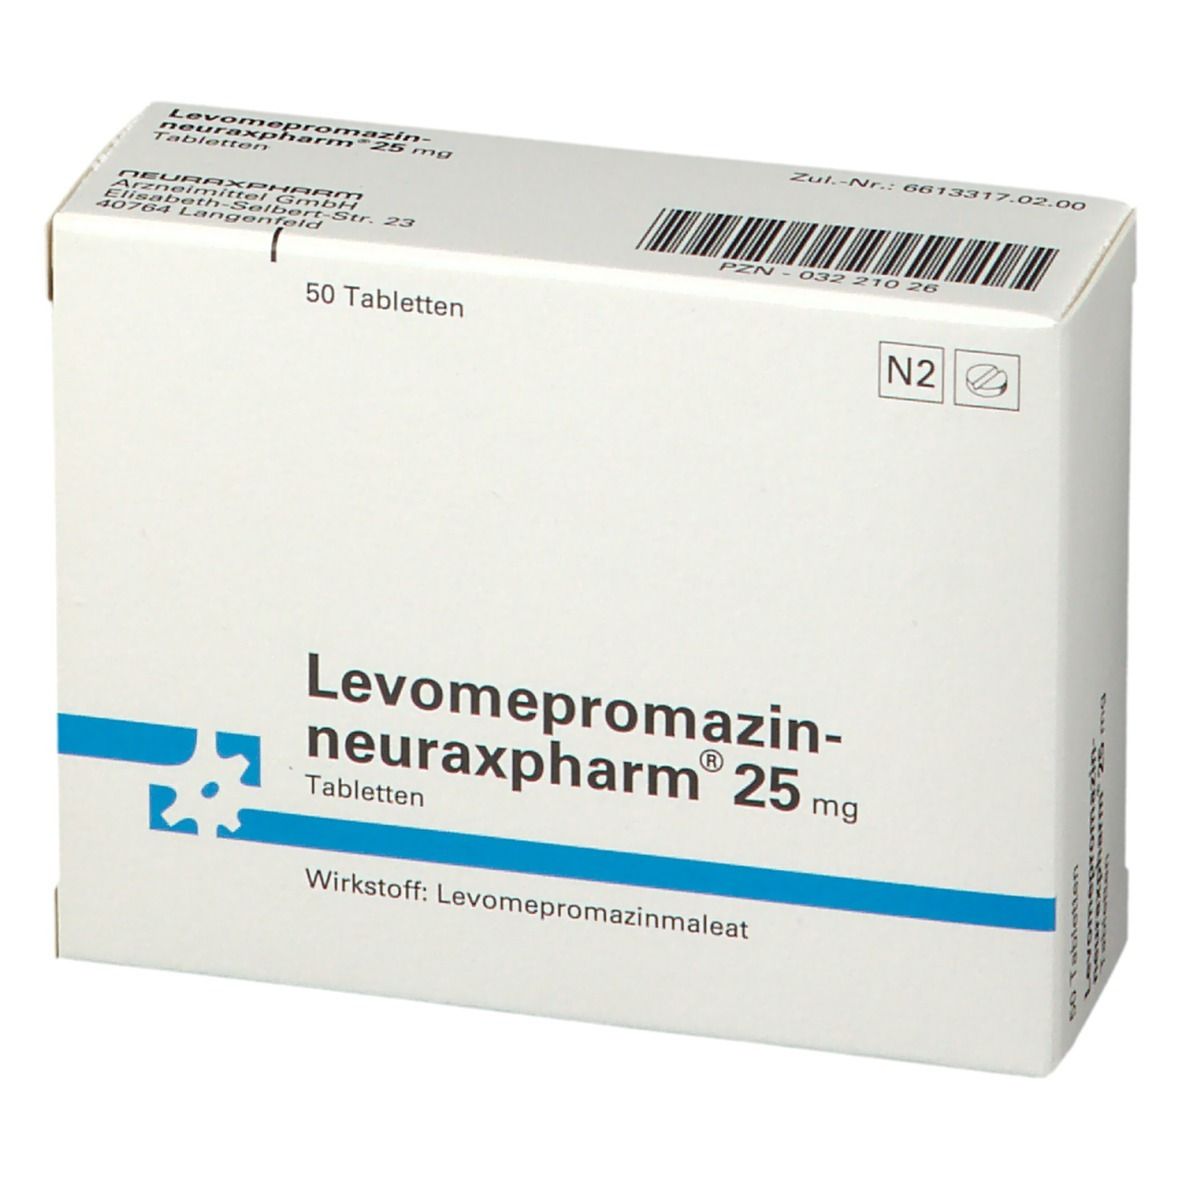 Levomepromazin-neuraxpharm® 25 mg